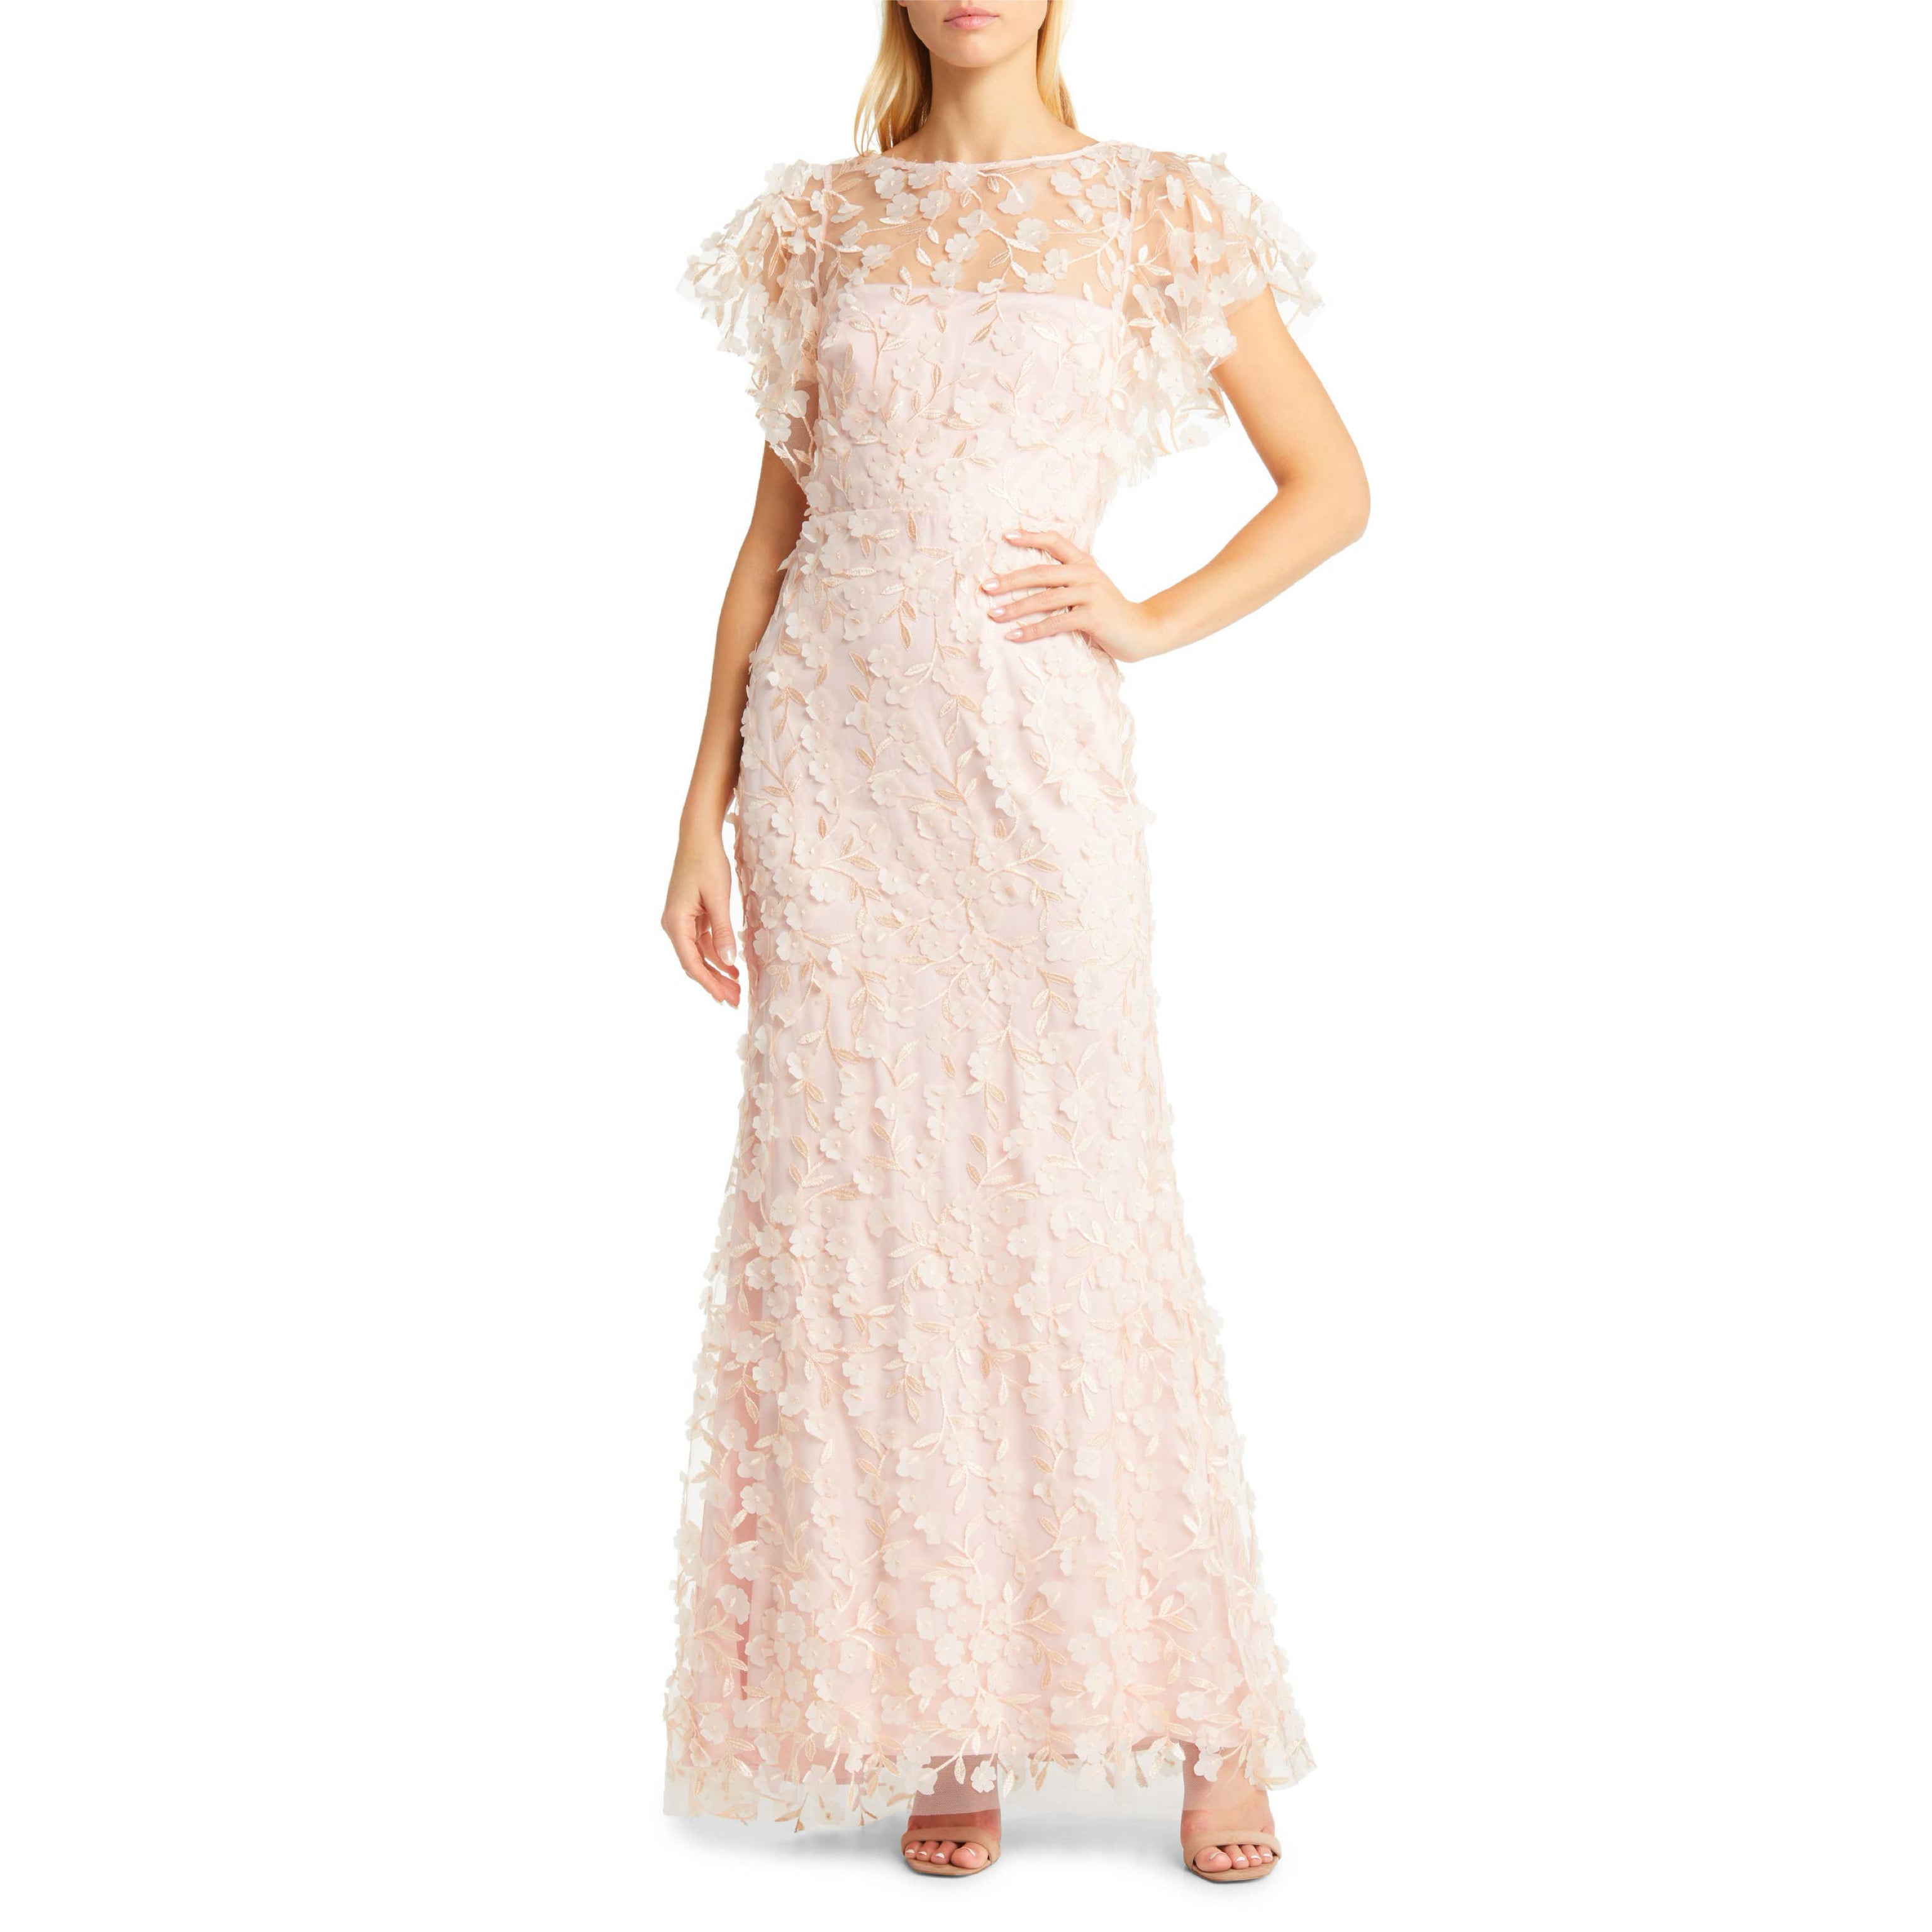 Eliza J. blush 3D floral dress, size 12